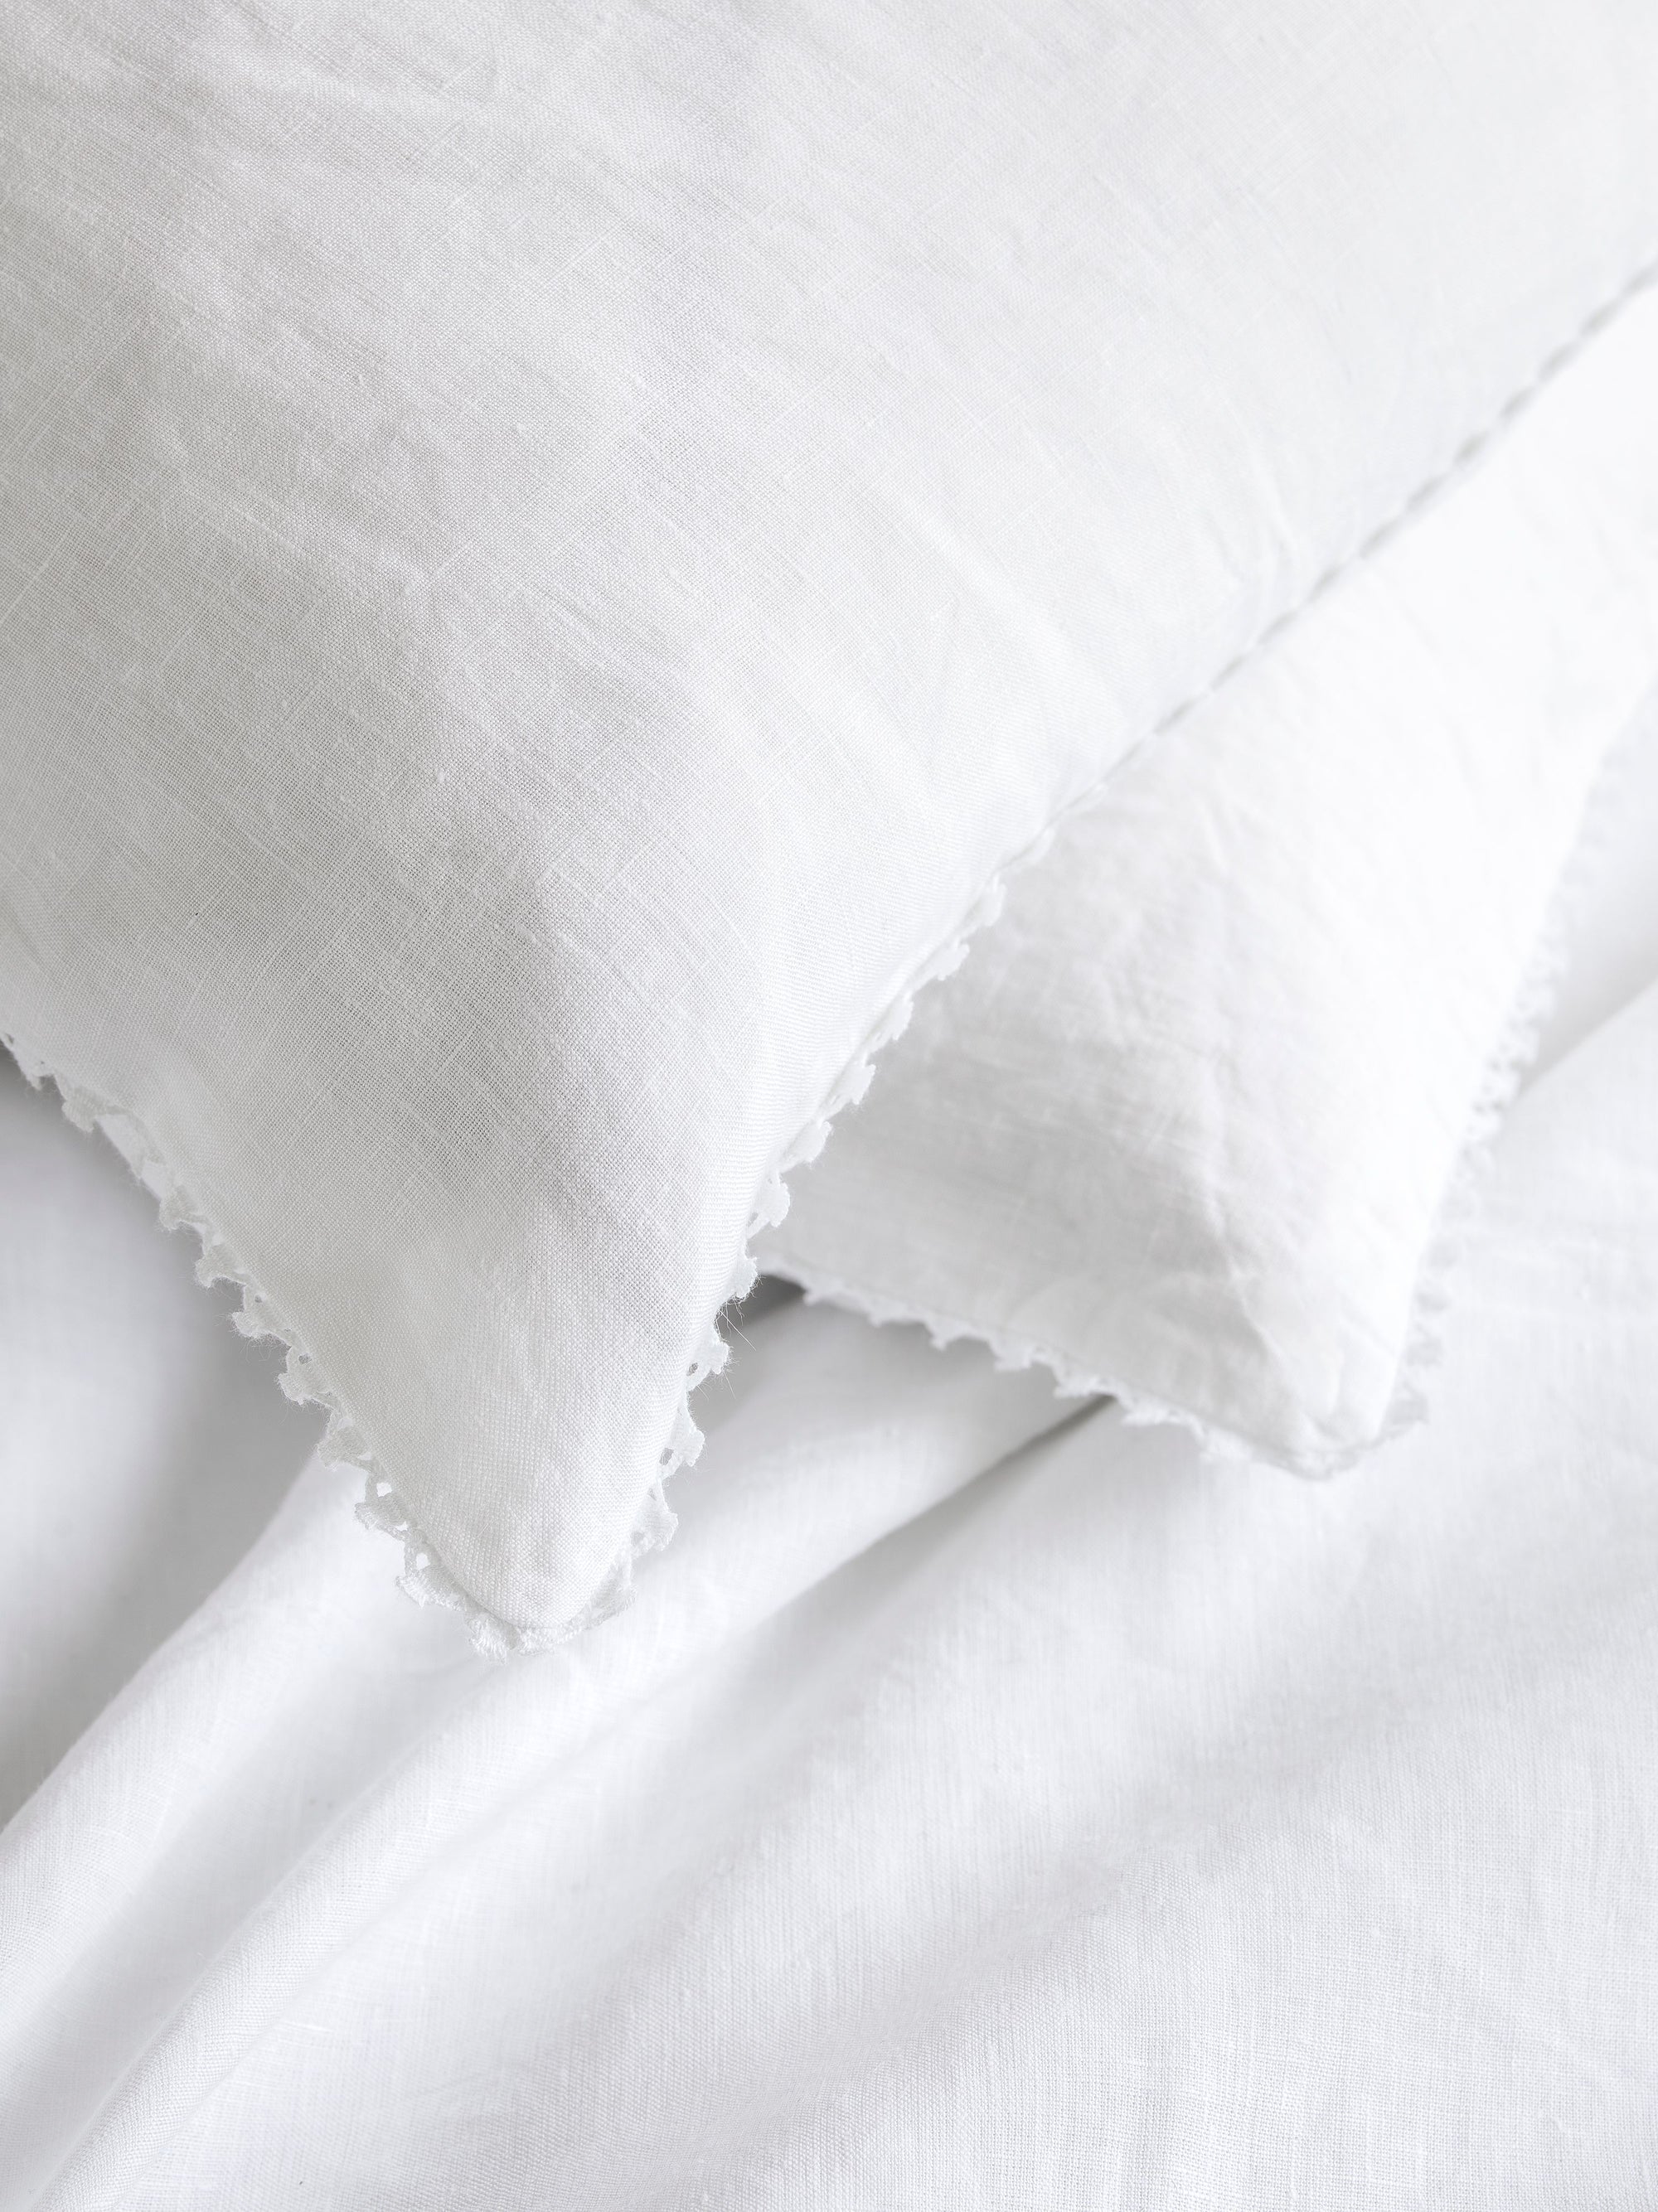 Nouvelle Vague White Bedding by Alexandre Turpault | Fig Linens 